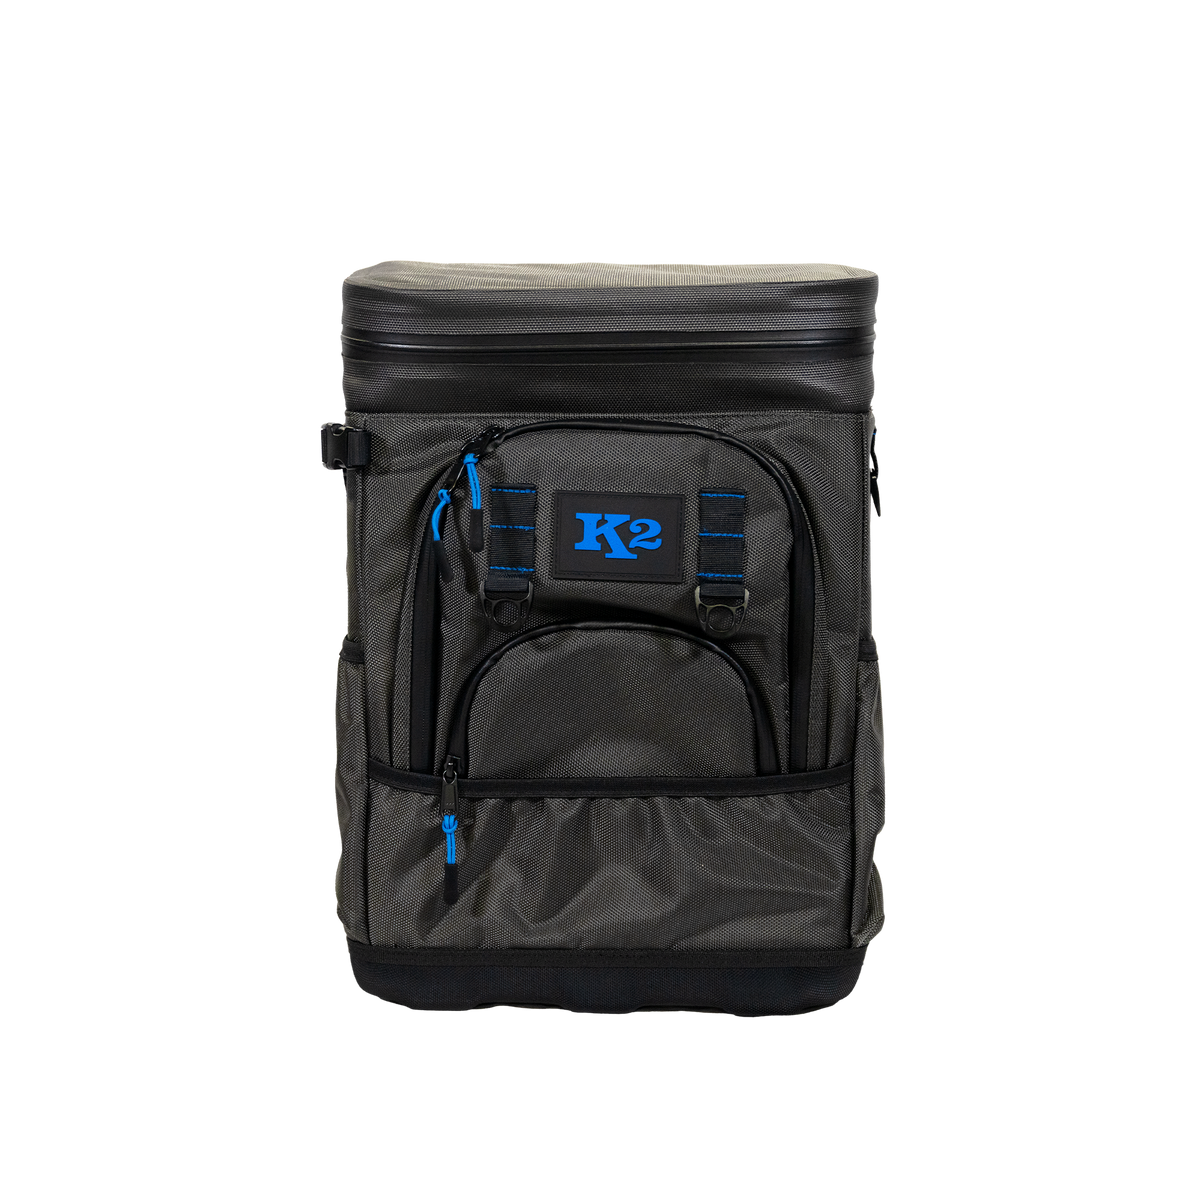 K2 Sherpa Backpack Cooler by K2Coolers